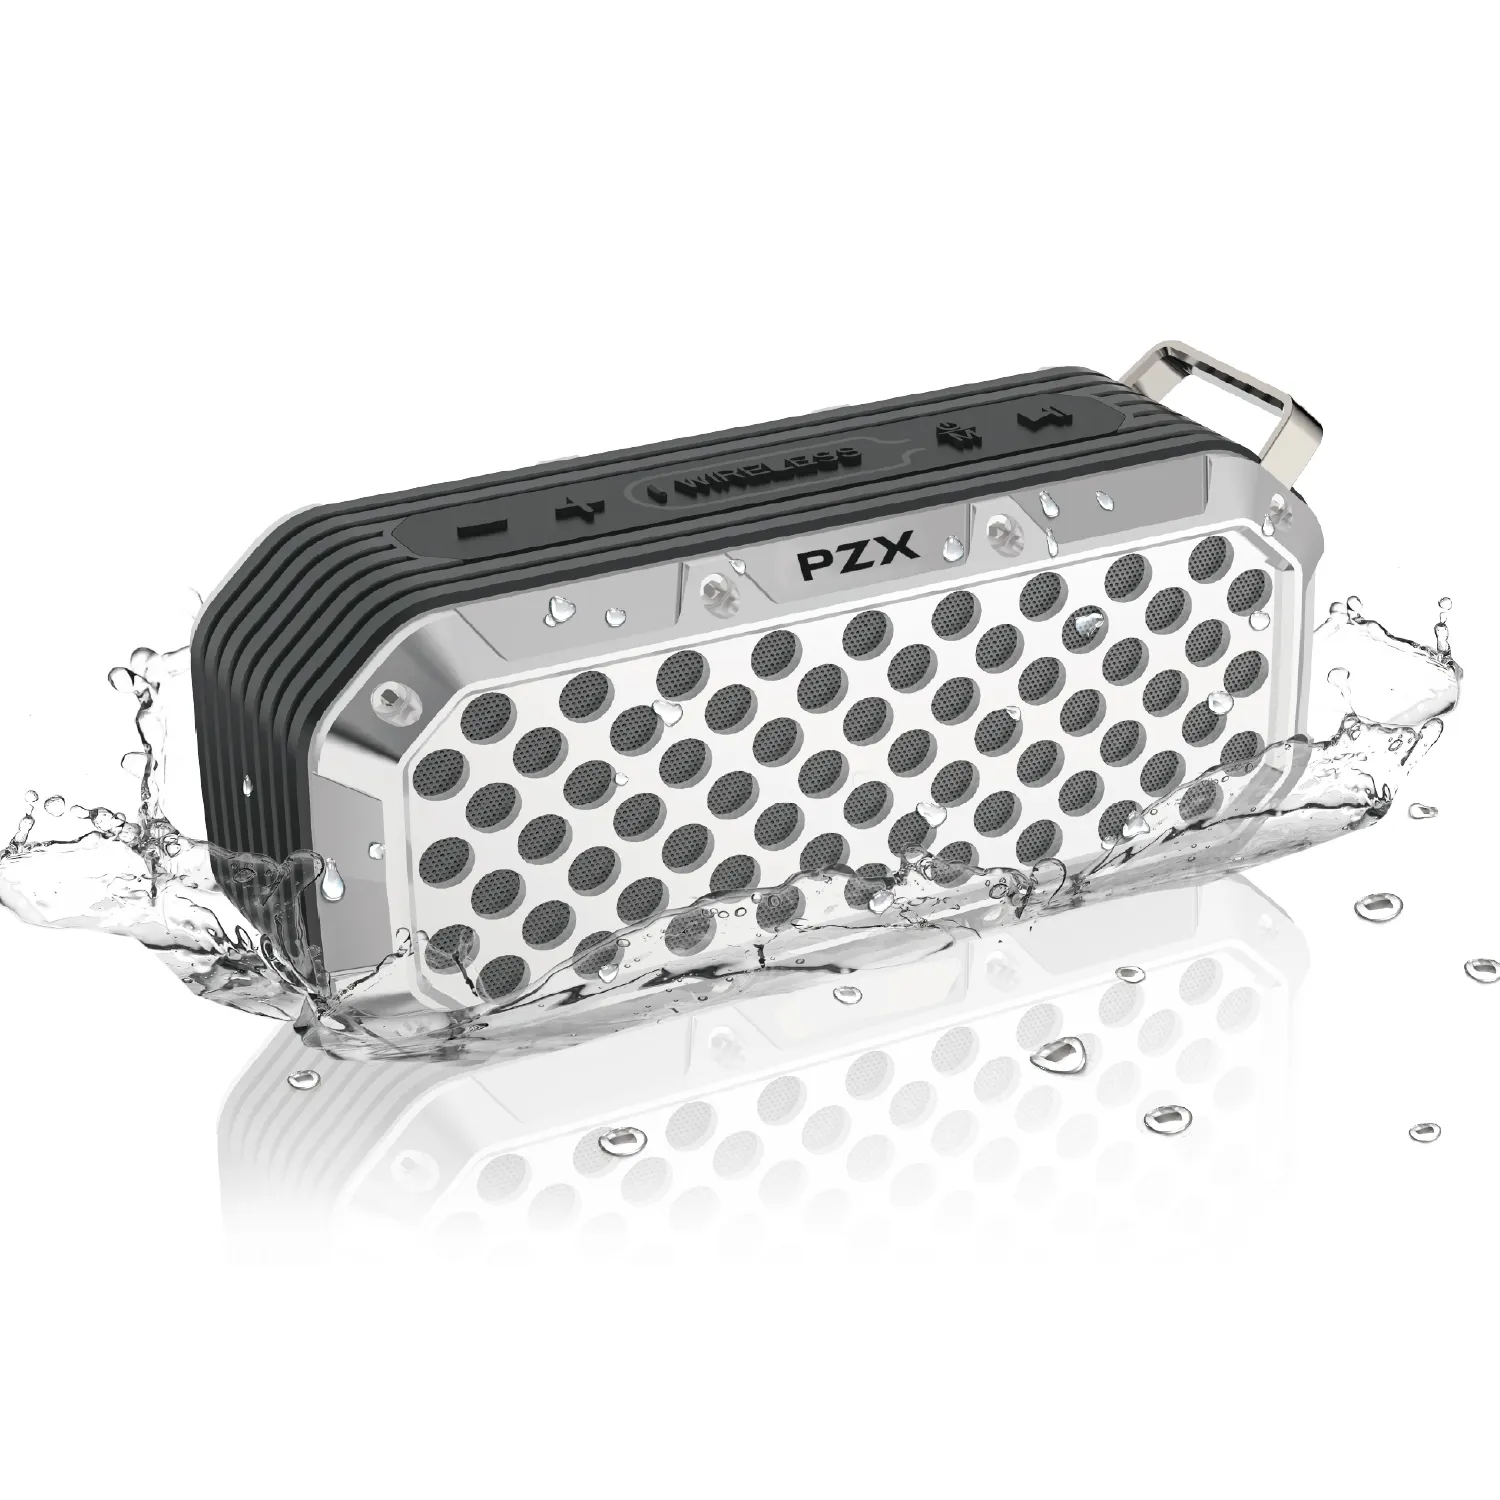 PZX Portable Mini P200 Waterproof BT5.0 Wireless Super Bass Audio Player HiFi FM TF Card Sound Box Small Outdoor Speaker